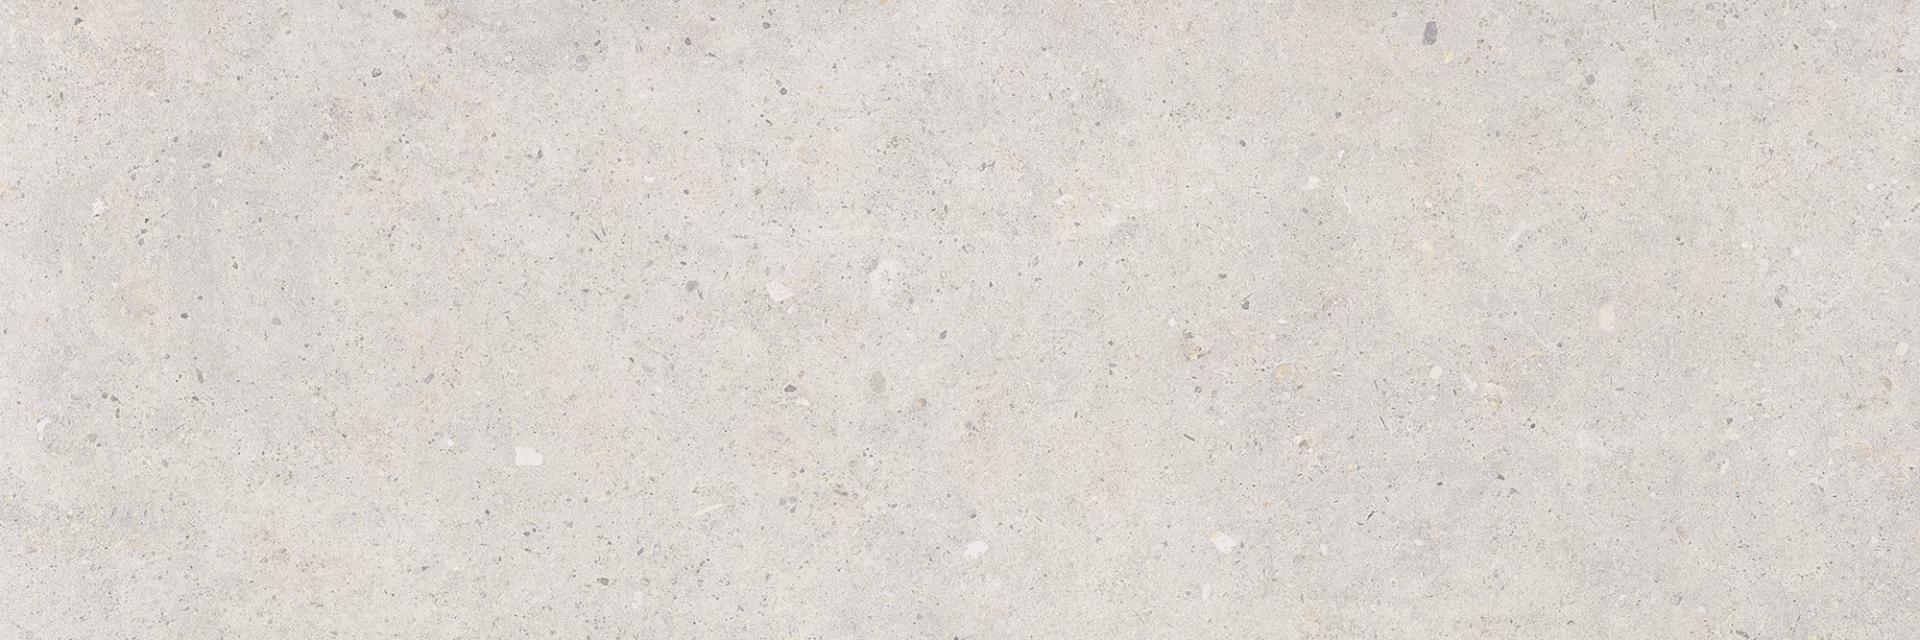 faience-sanchis-cement-stone-40x120-0-96m2-paq-white-0